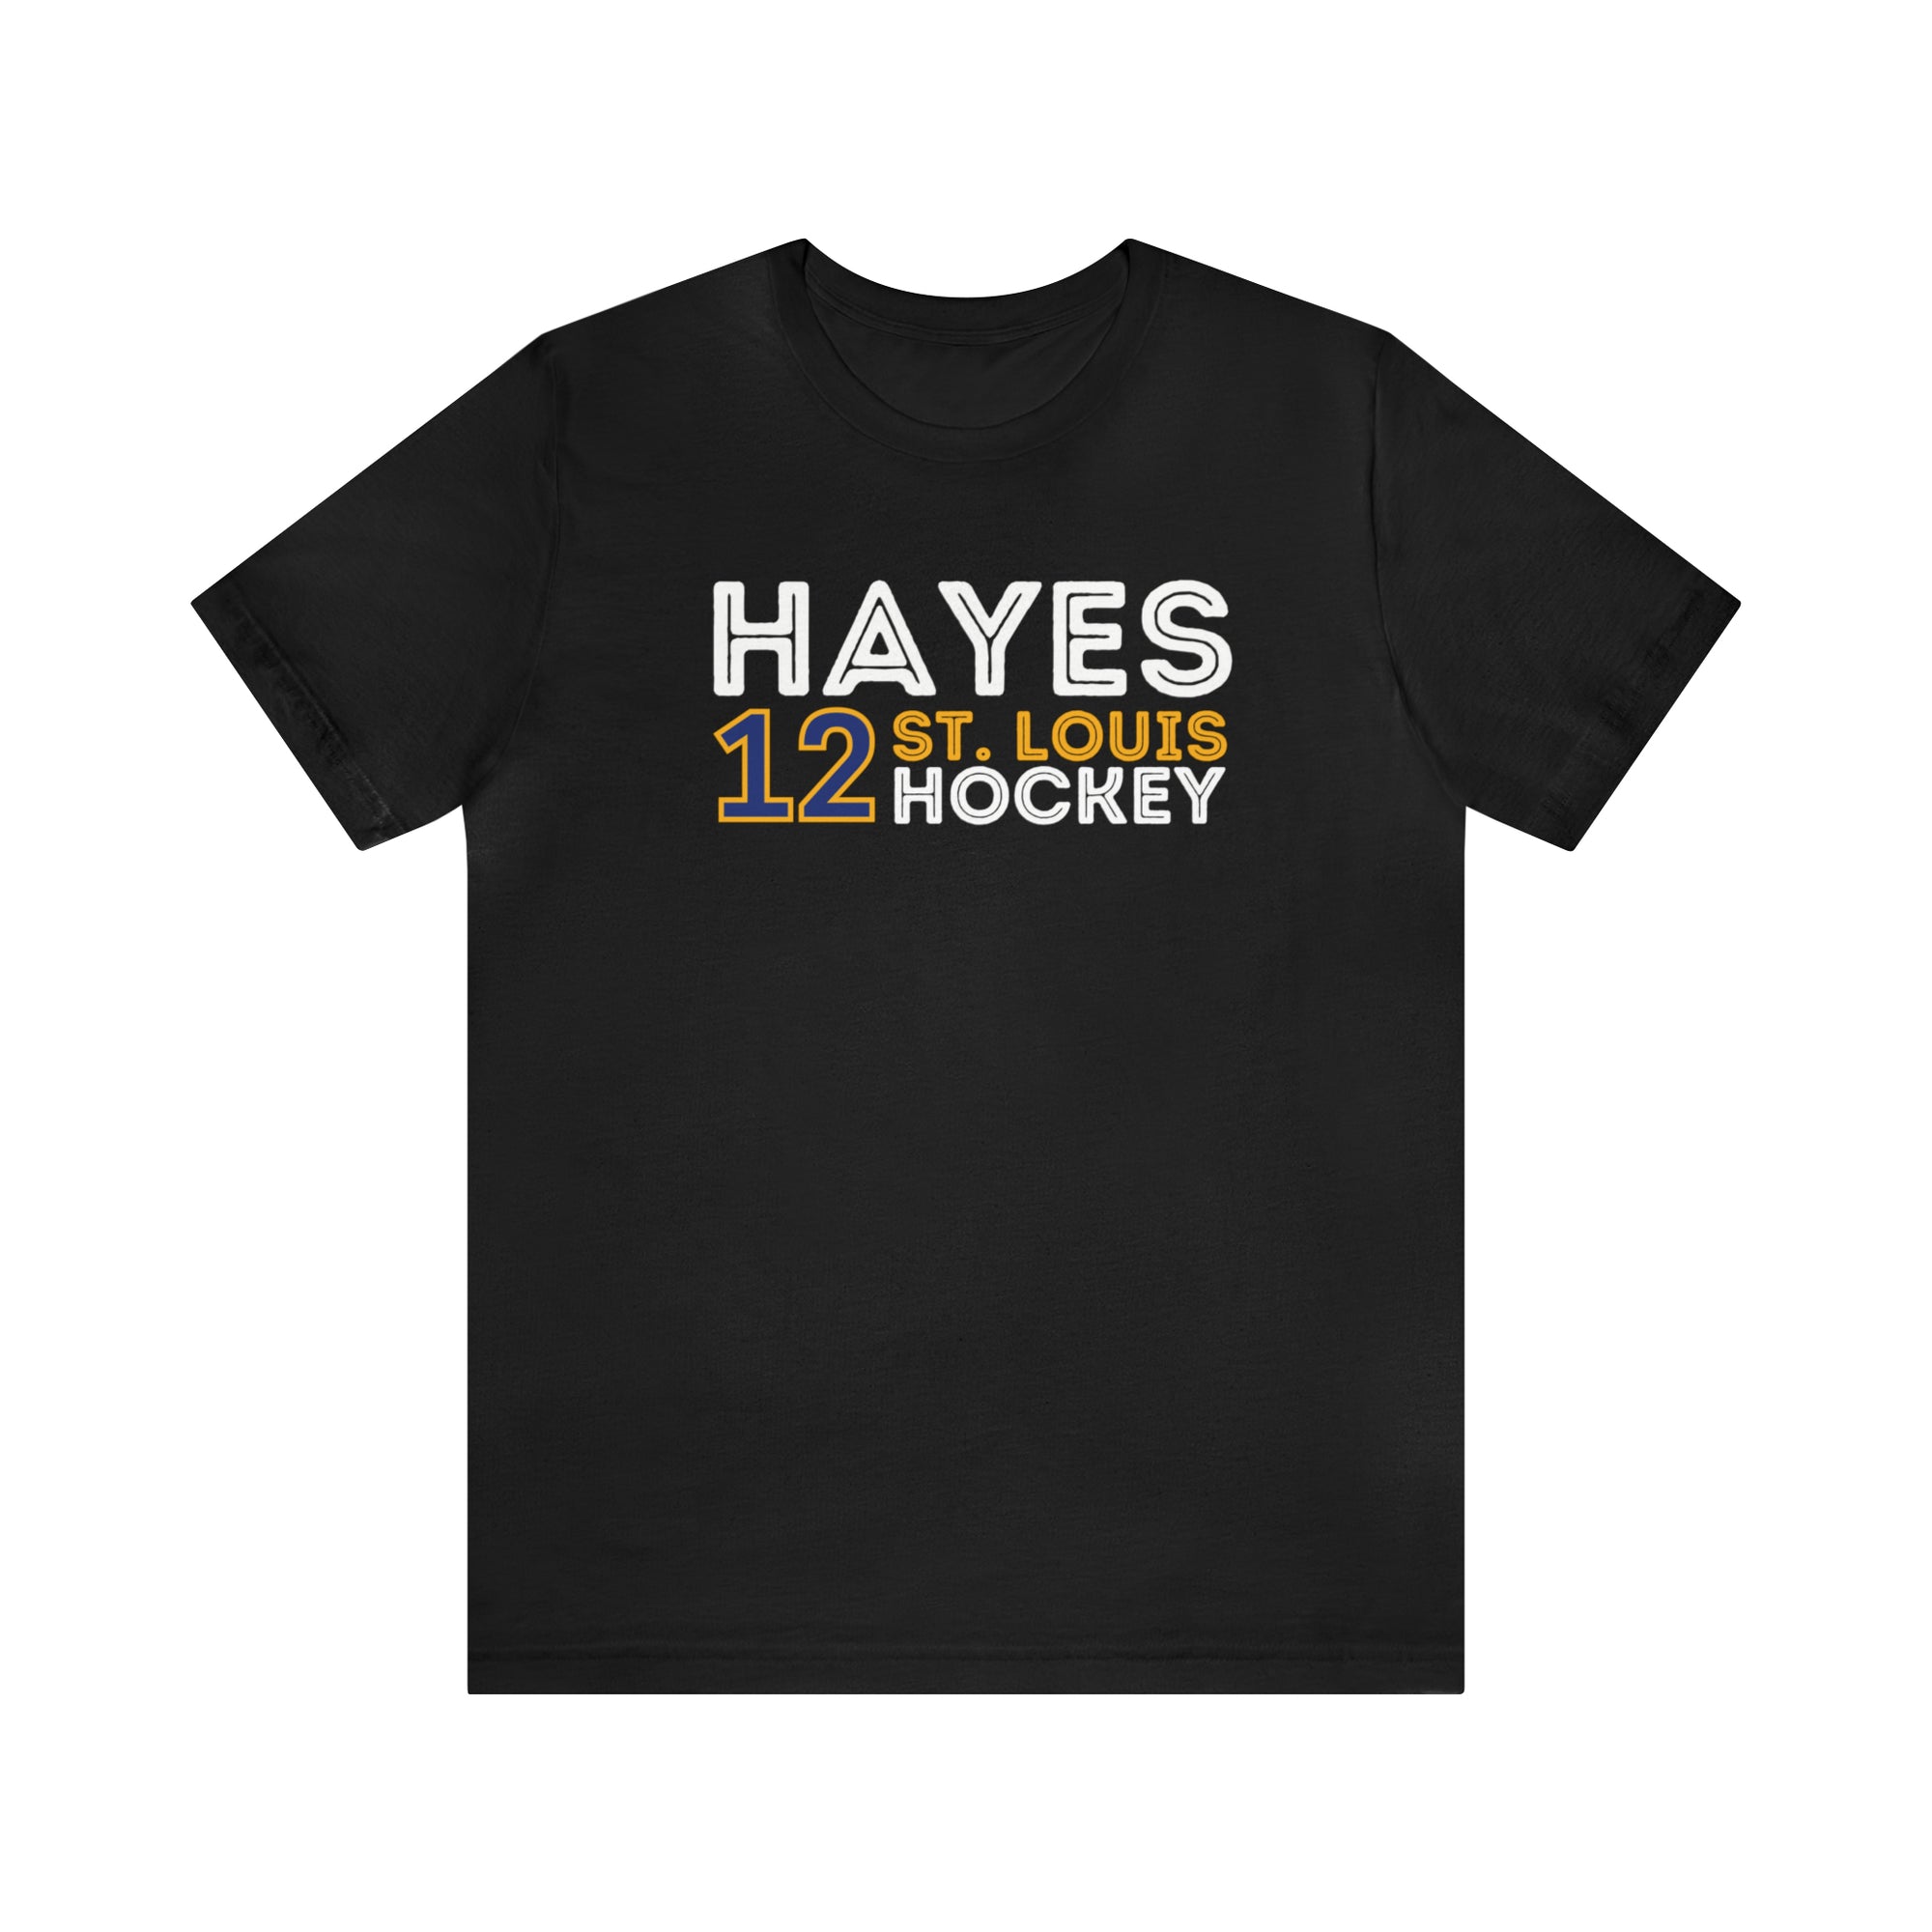 Hayes 12 St. Louis Hockey Grafitti Wall Design Unisex T-Shirt